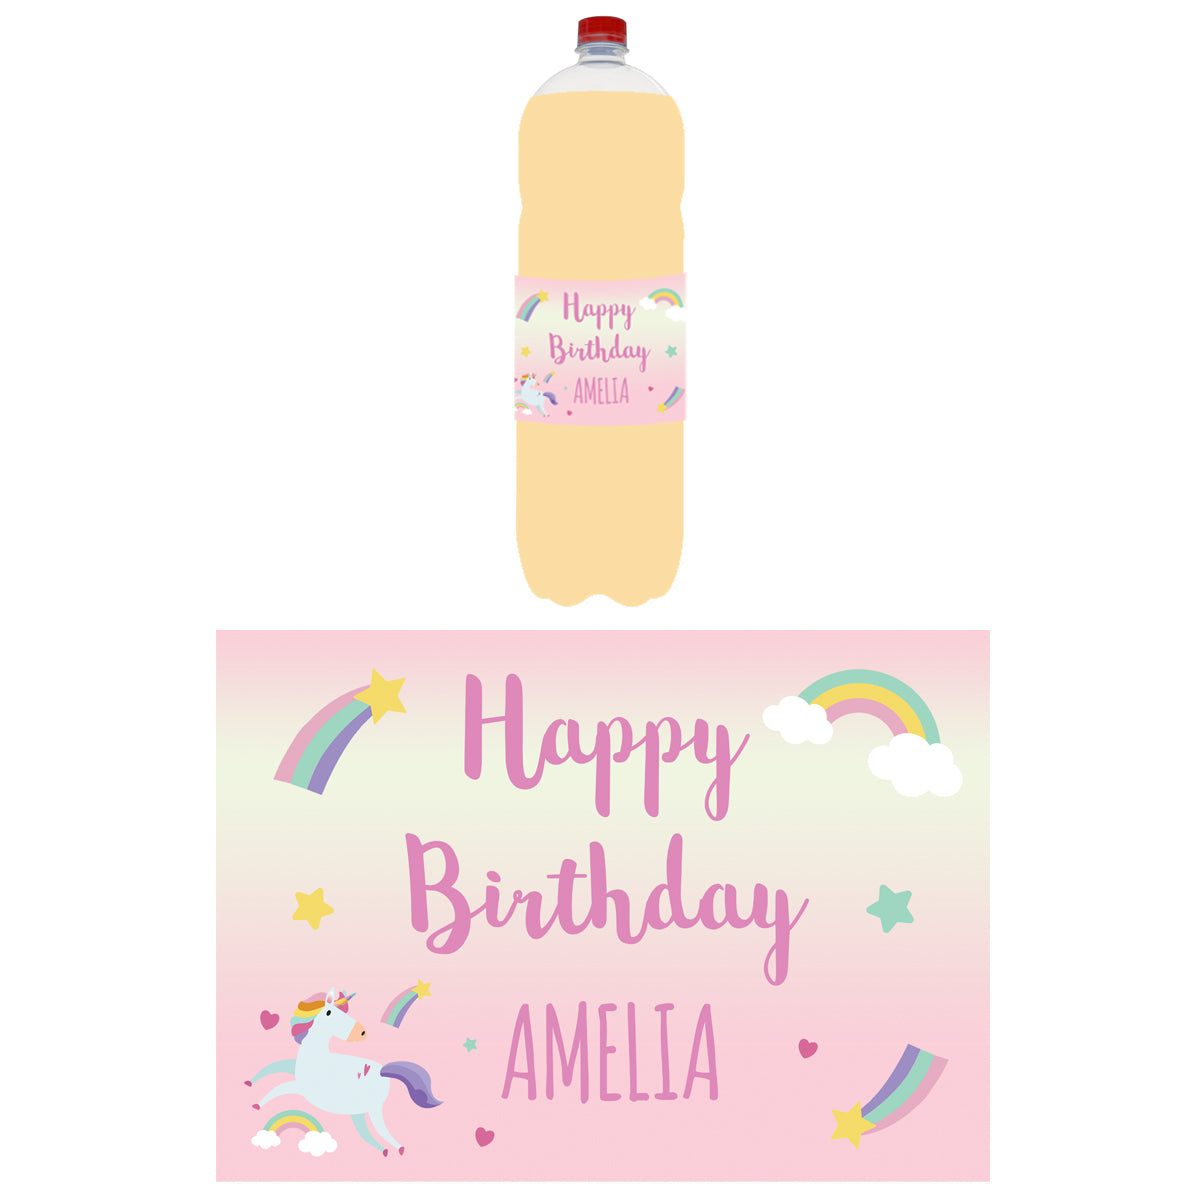 Personalised Bottle Labels - Pink Unicorn - Sheet of 4